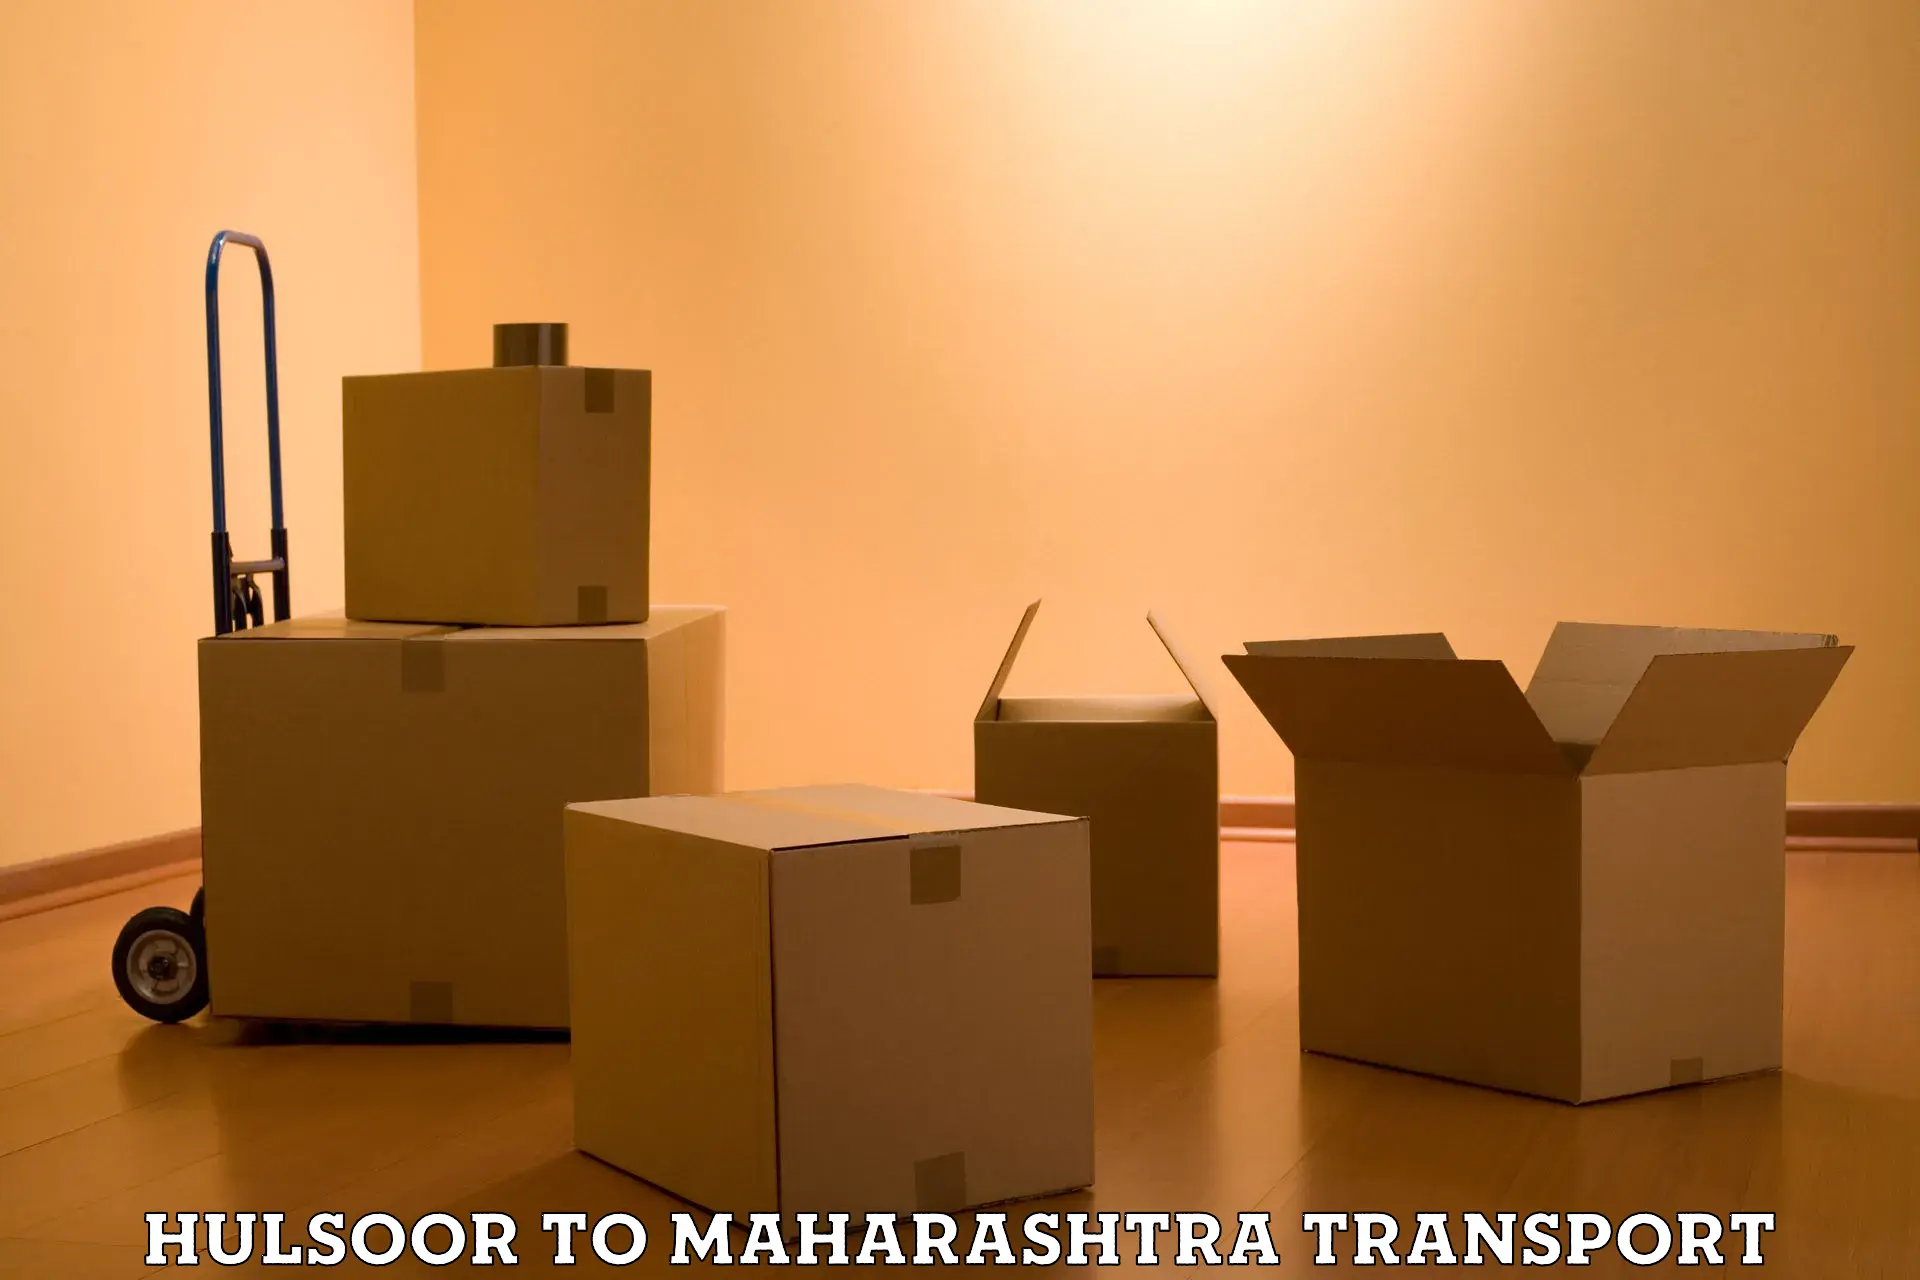 Sending bike to another city Hulsoor to Maharashtra